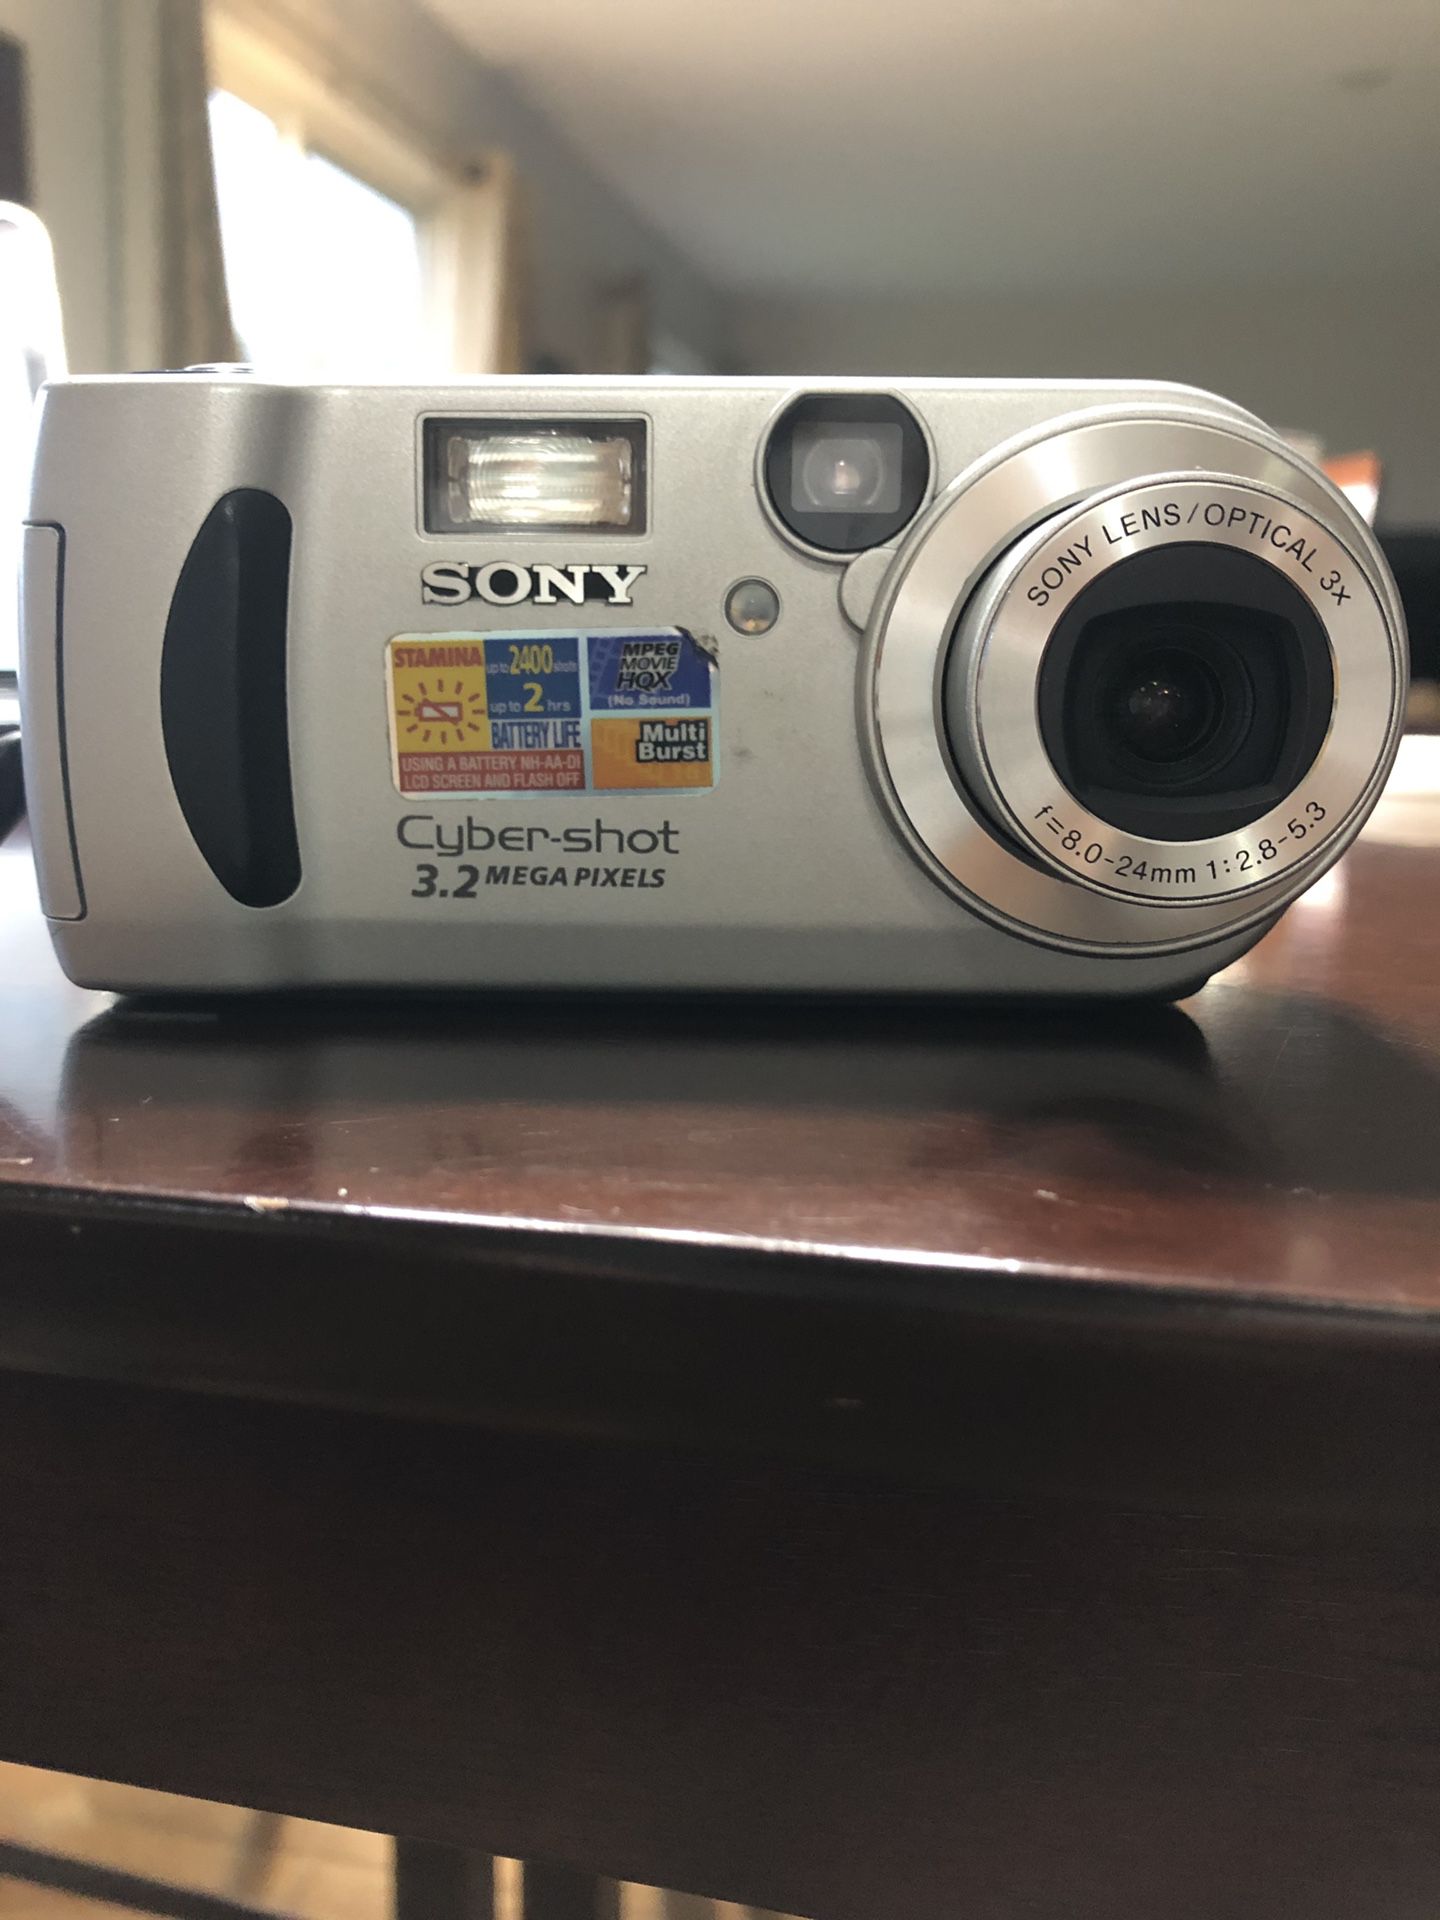 Sony Cyber-shot Camera